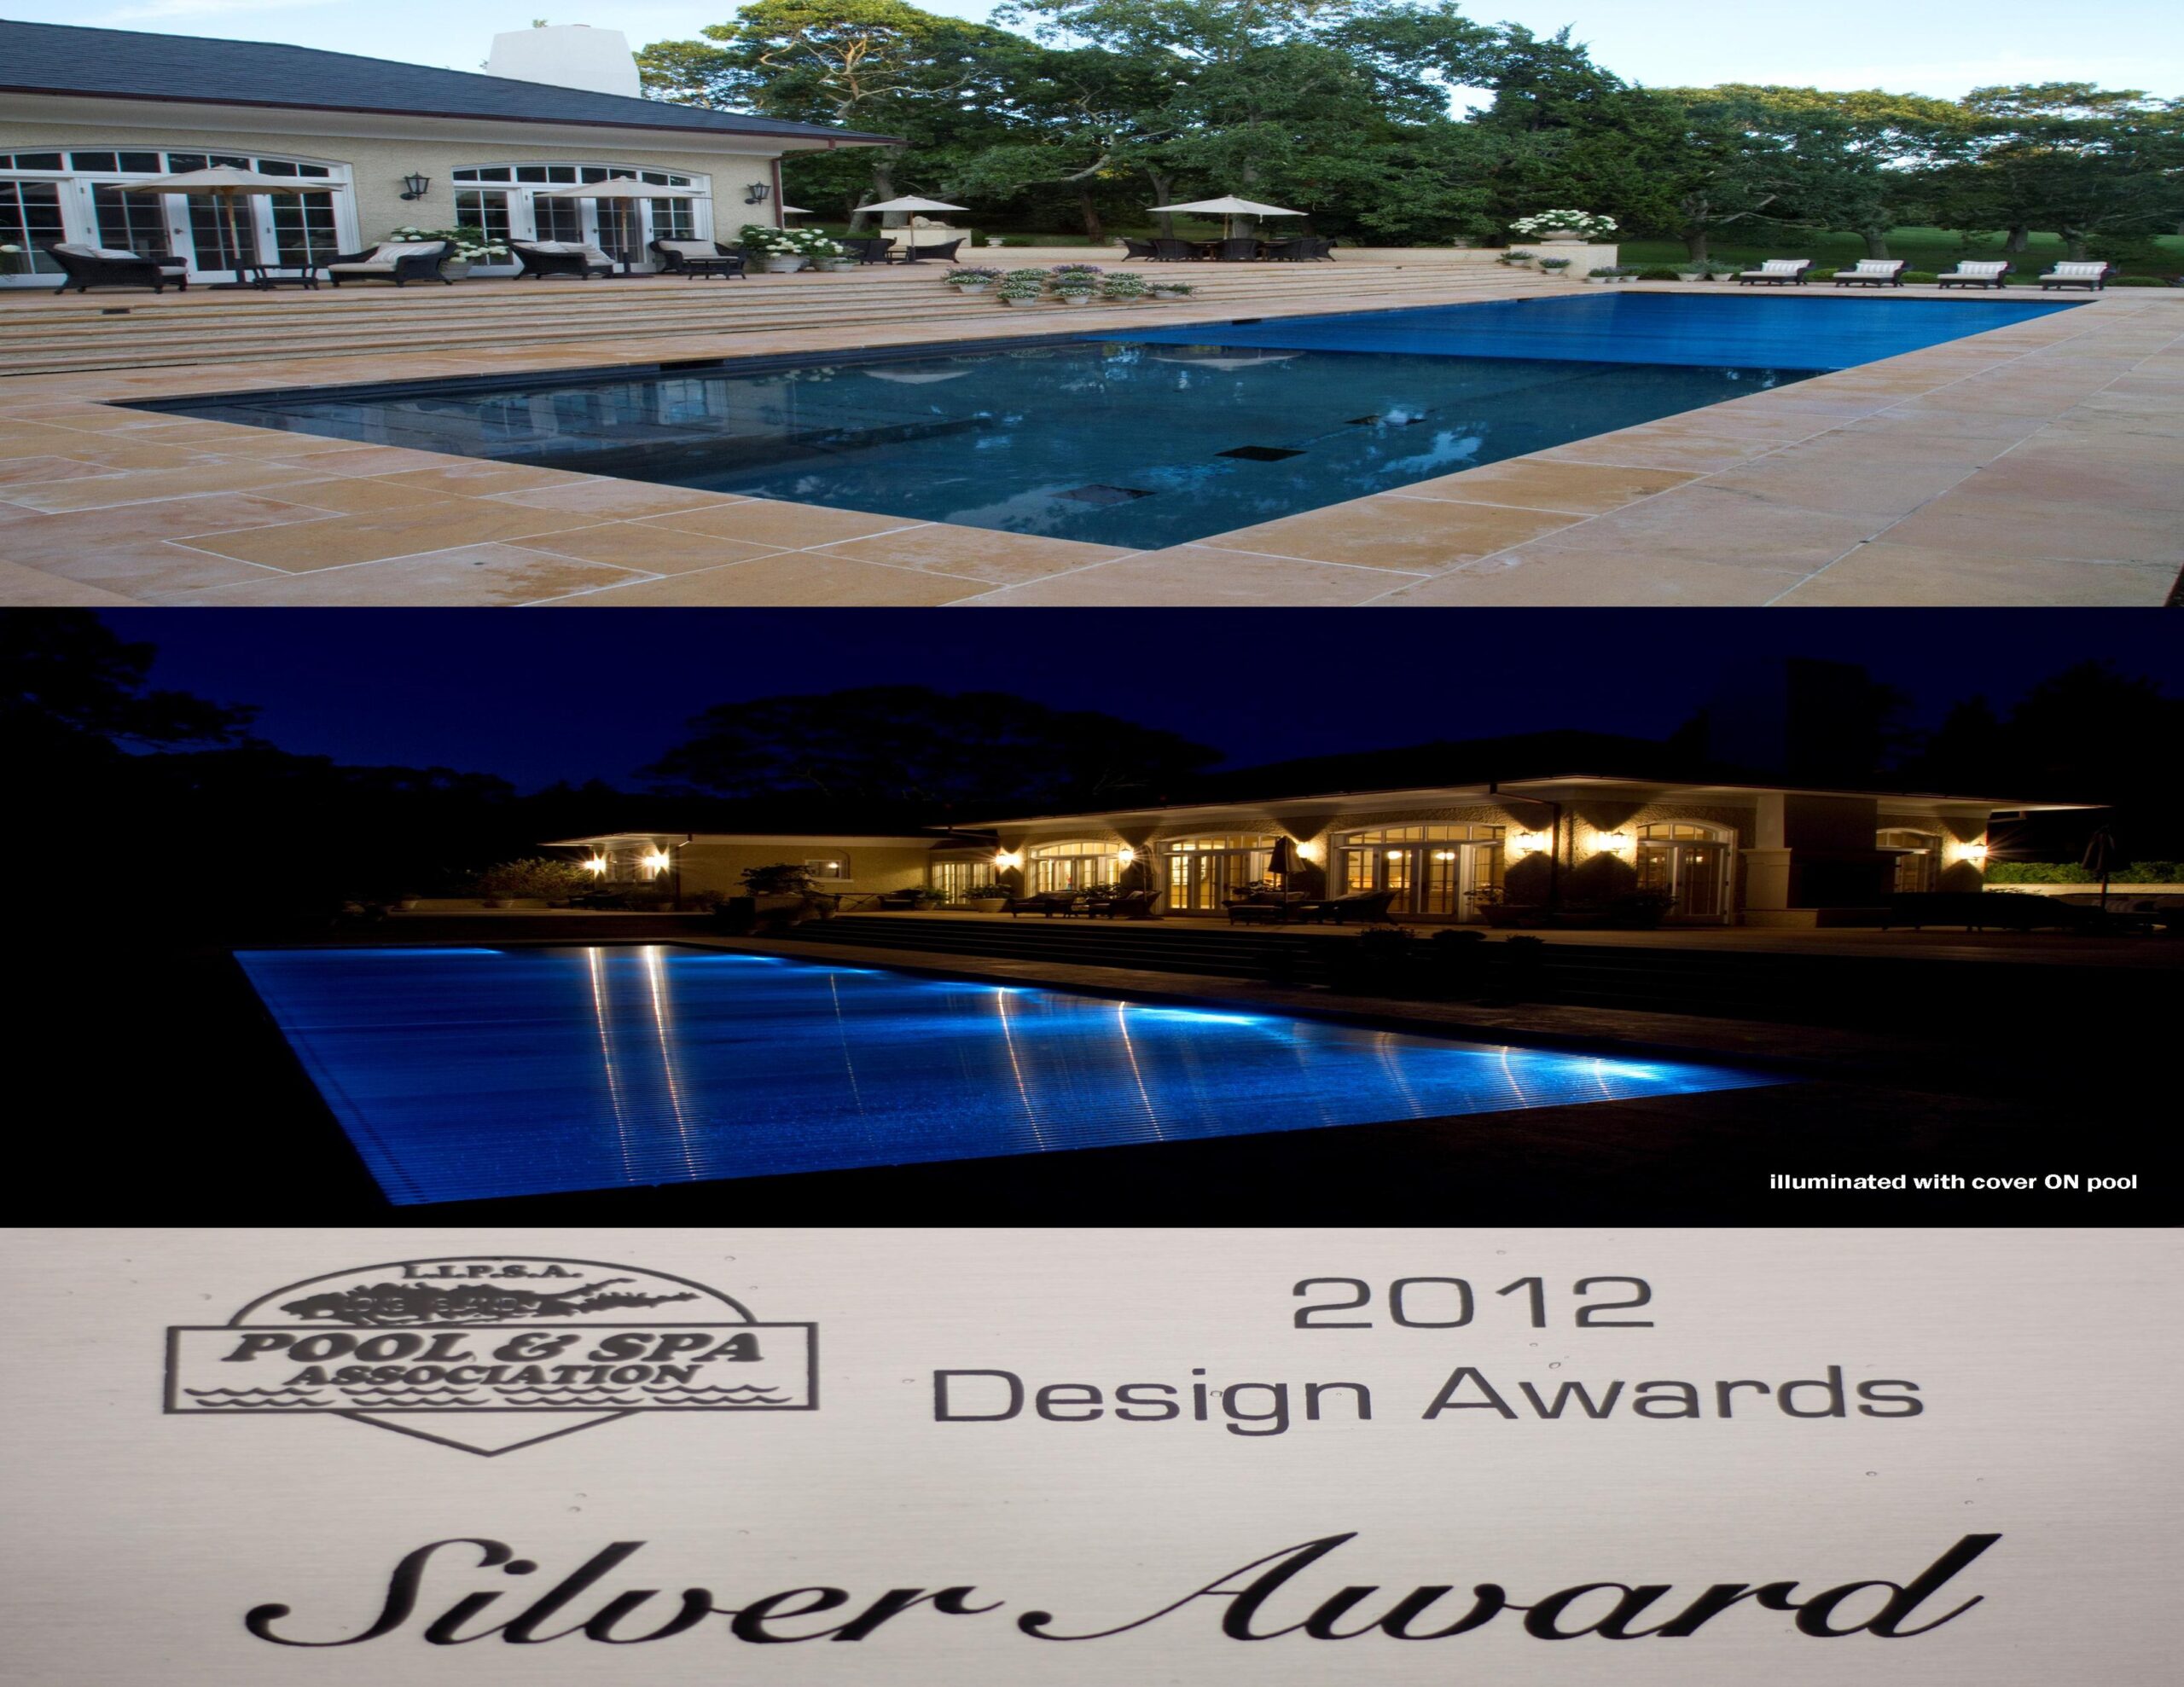 Covertech Grando automatic rigid pool cover LongIsland Pool _ SPA Pool Cover Silver Award 2012